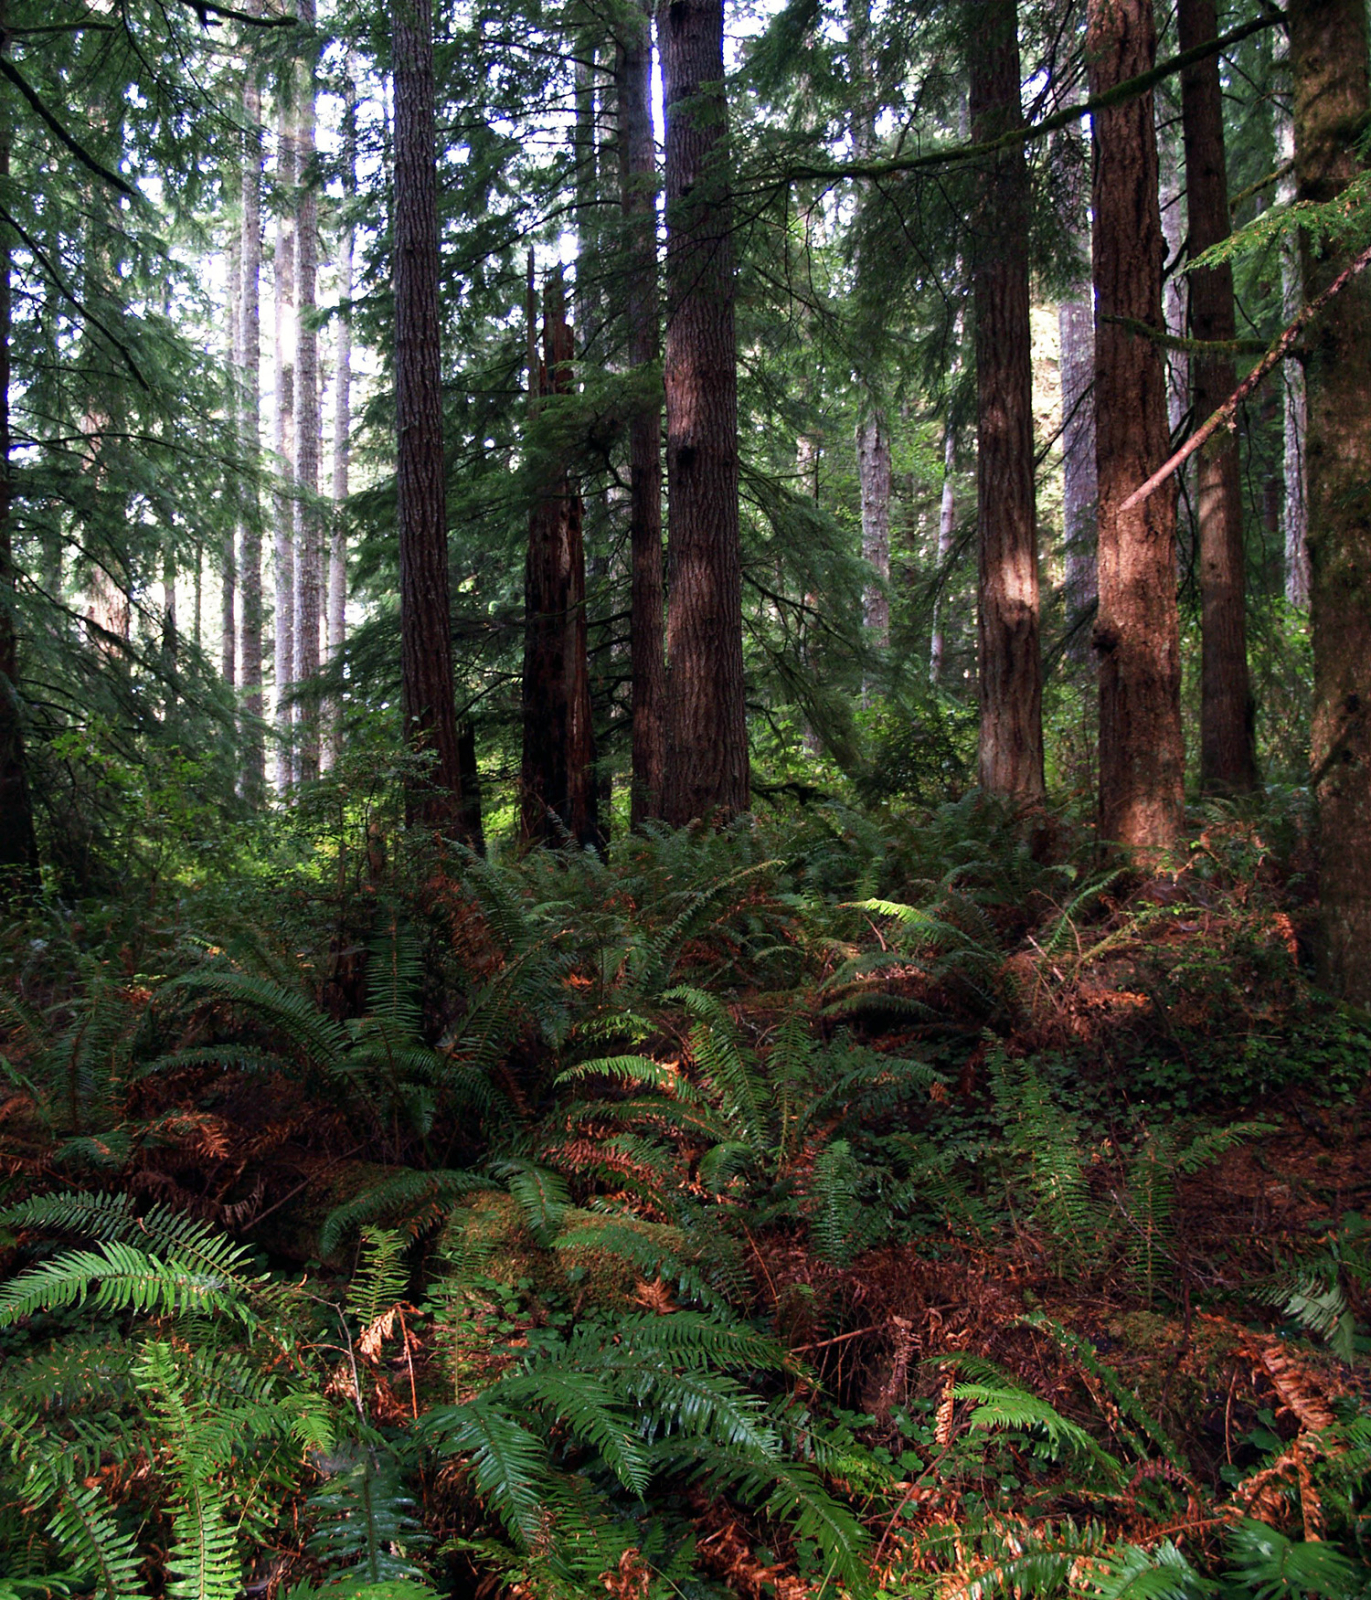 Typical coastal Oregon Forest